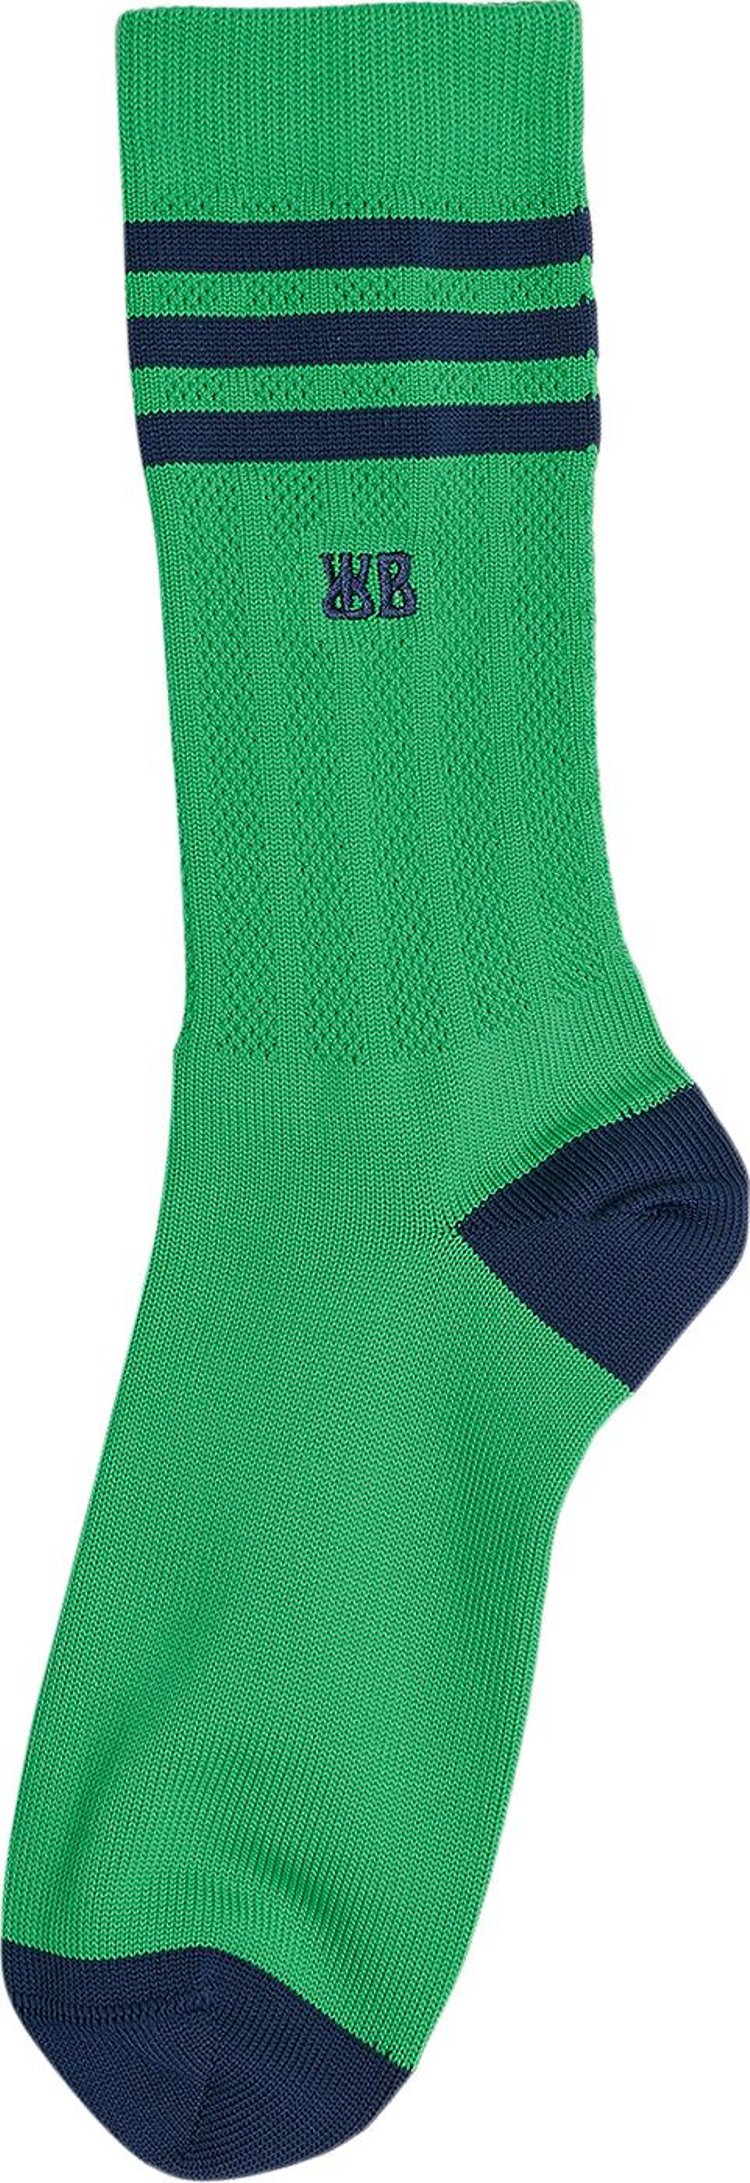 adidas x Wales Bonner Socks 'Vivid Green/Collegiate/Navy'